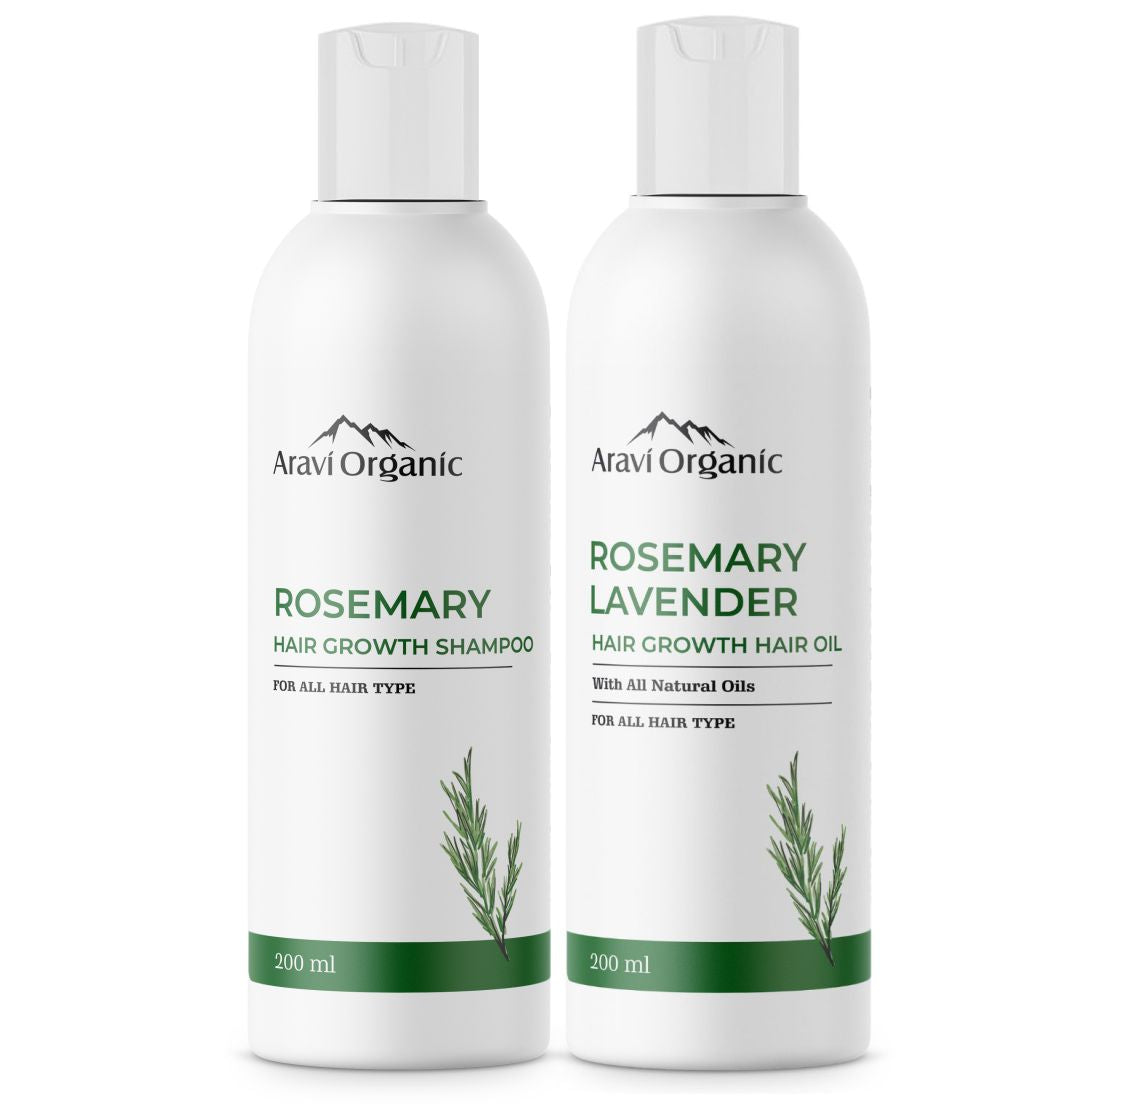 Rosemary Heathy Hair Growth Oil with Lavender with Rosemary Hair Growth Shampoo.